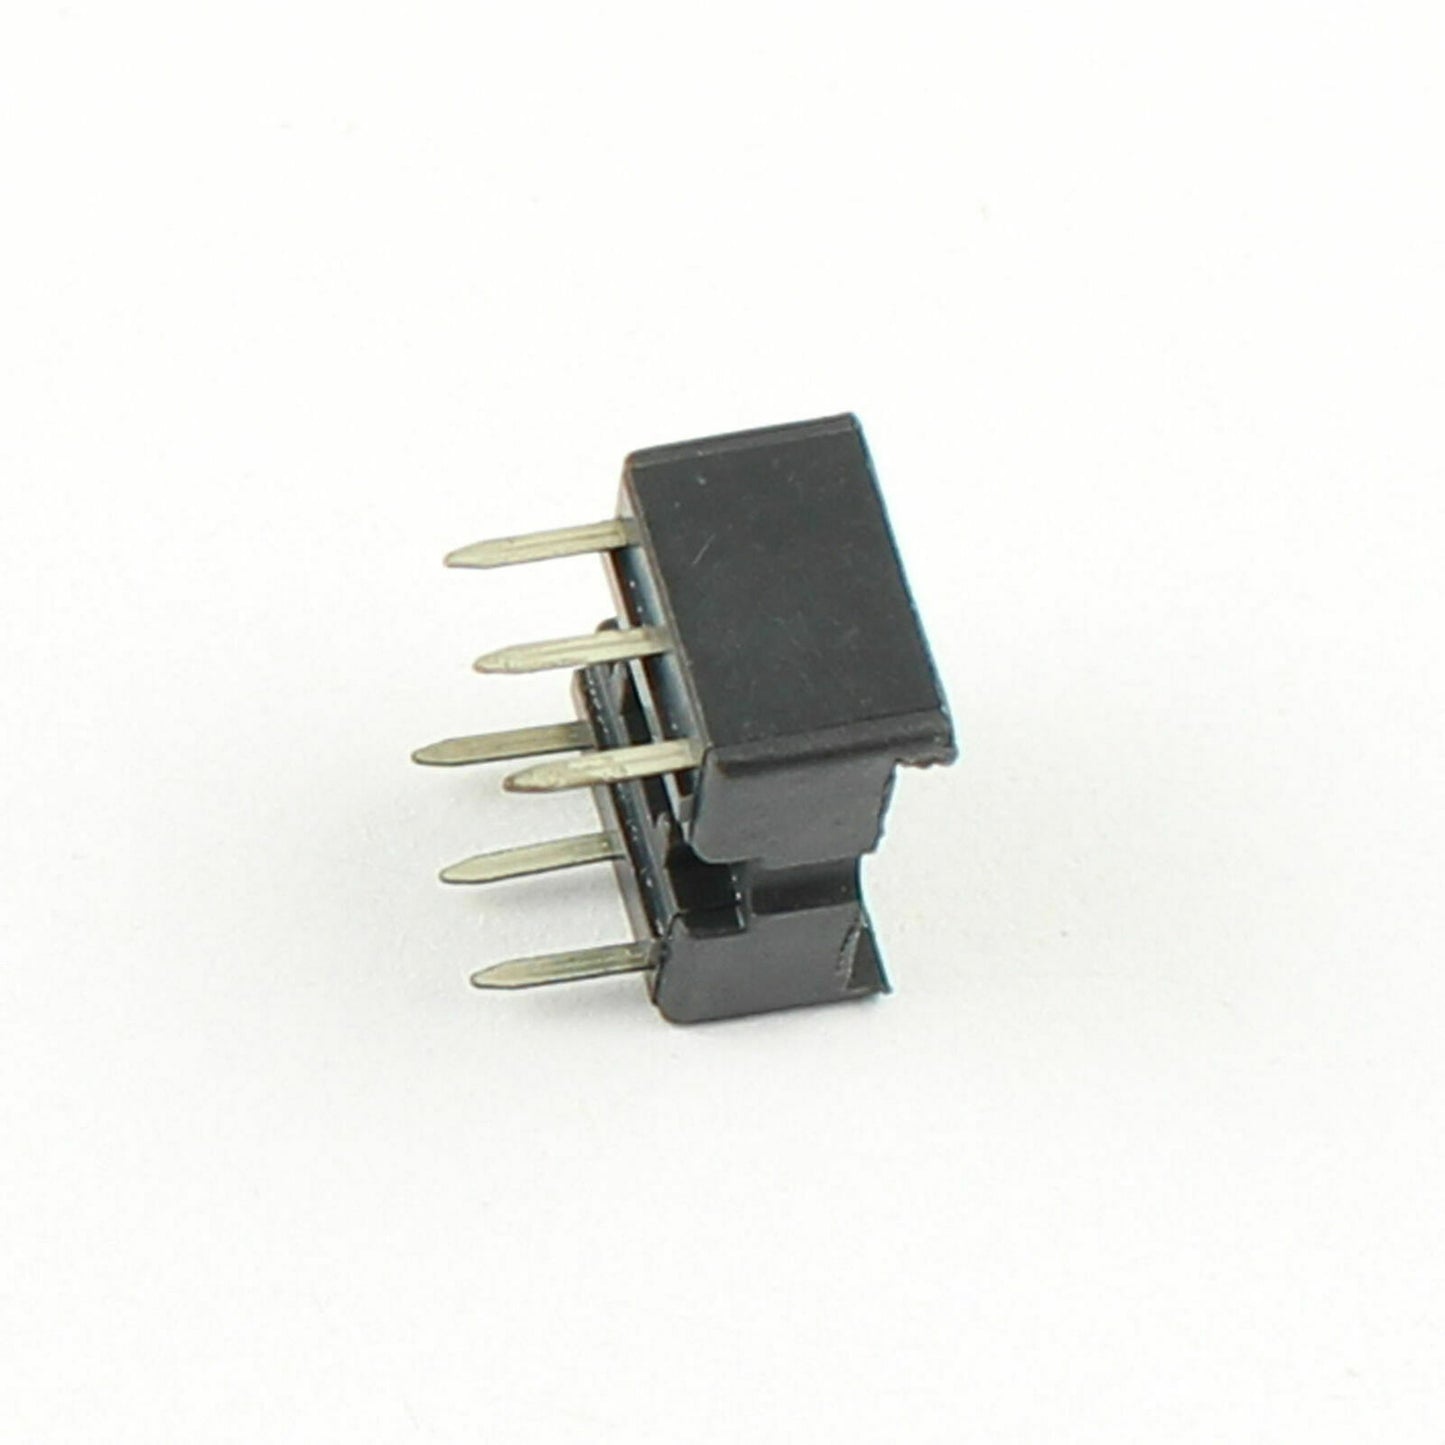 2.54mm Pitch 6 Pin DIP Solder Type IC Socket Adaptor (10 pack)